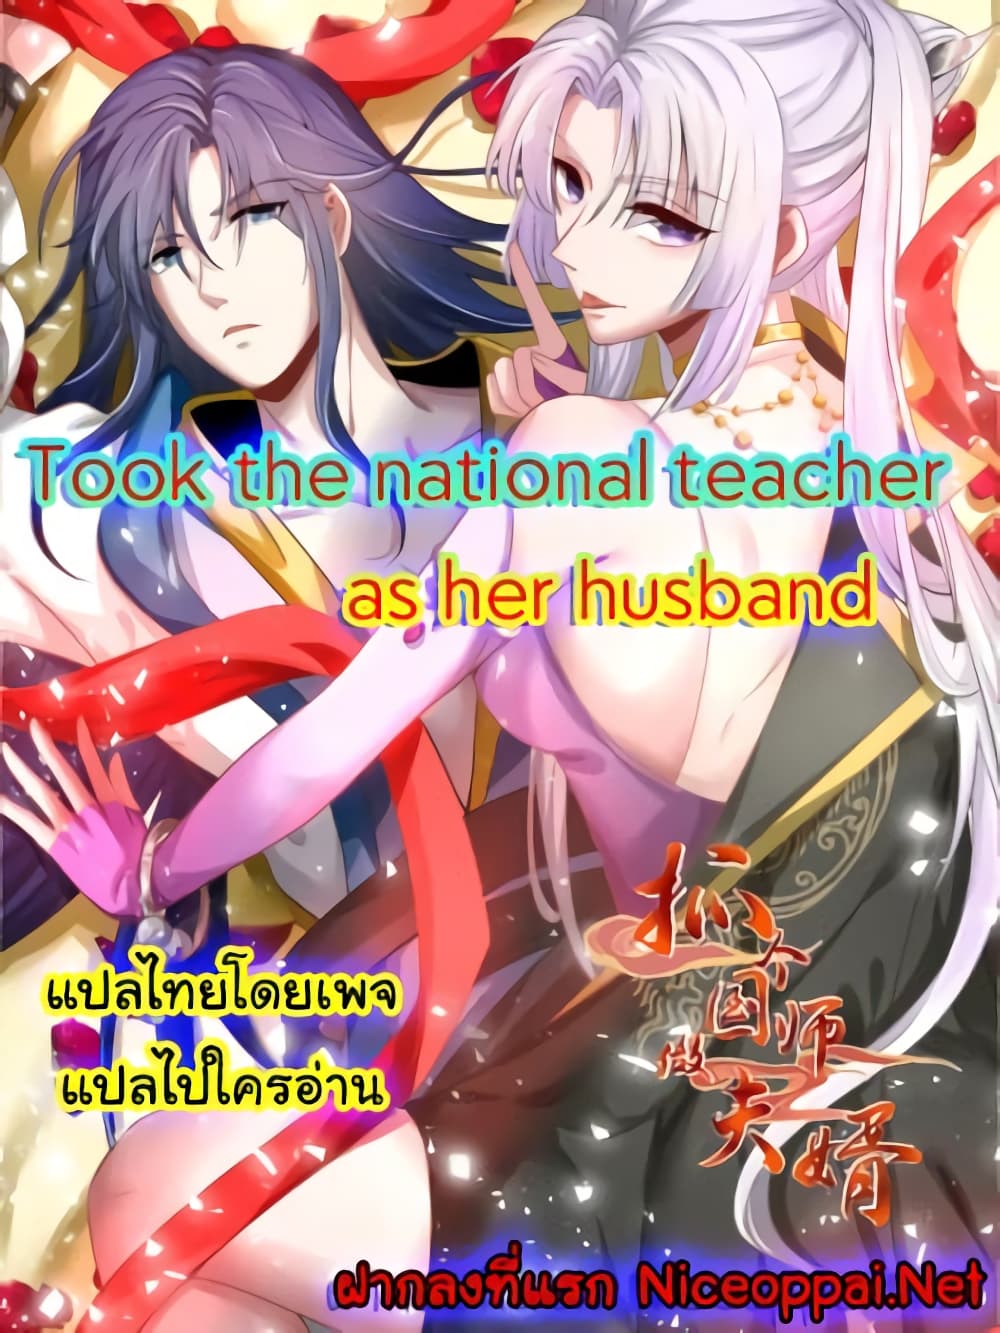 Took the National Teacher as Her Husband 14 (1)